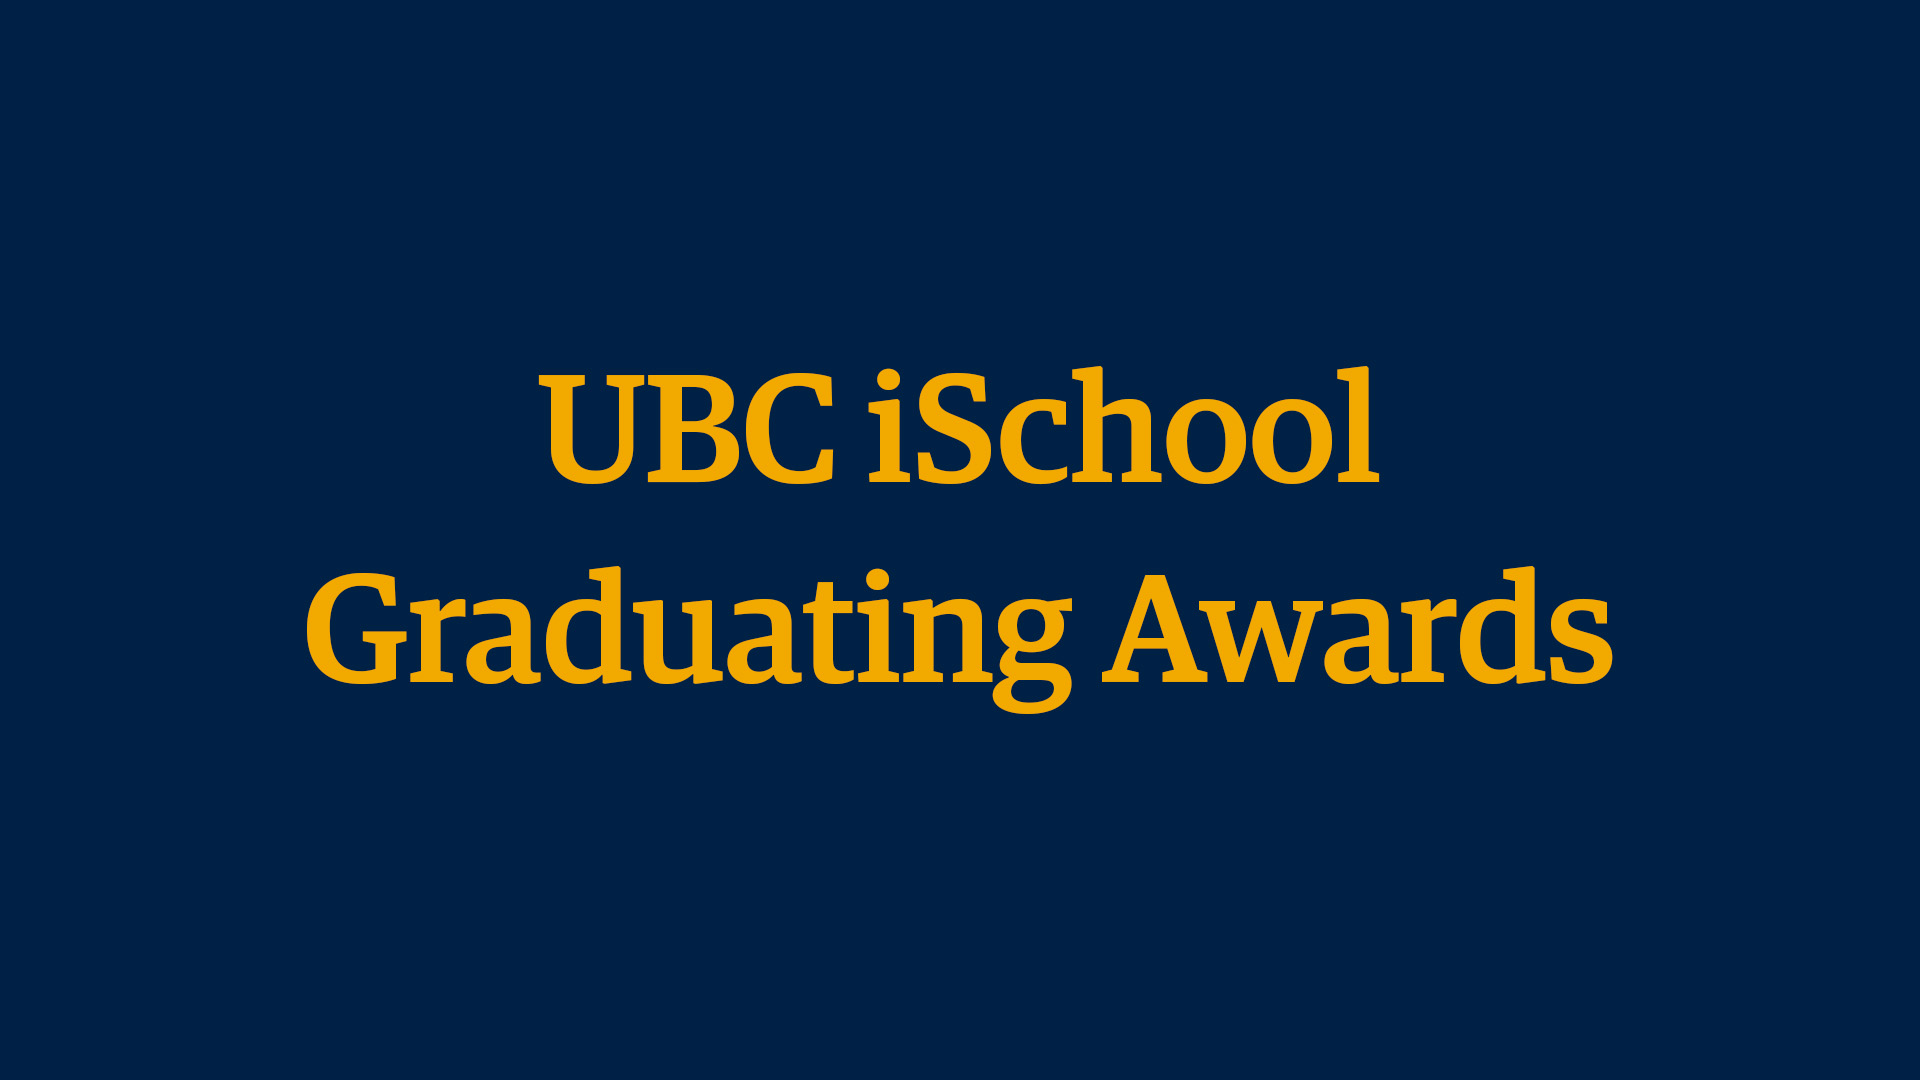 apply-for-the-ubc-ischool-graduating-awards-school-of-information